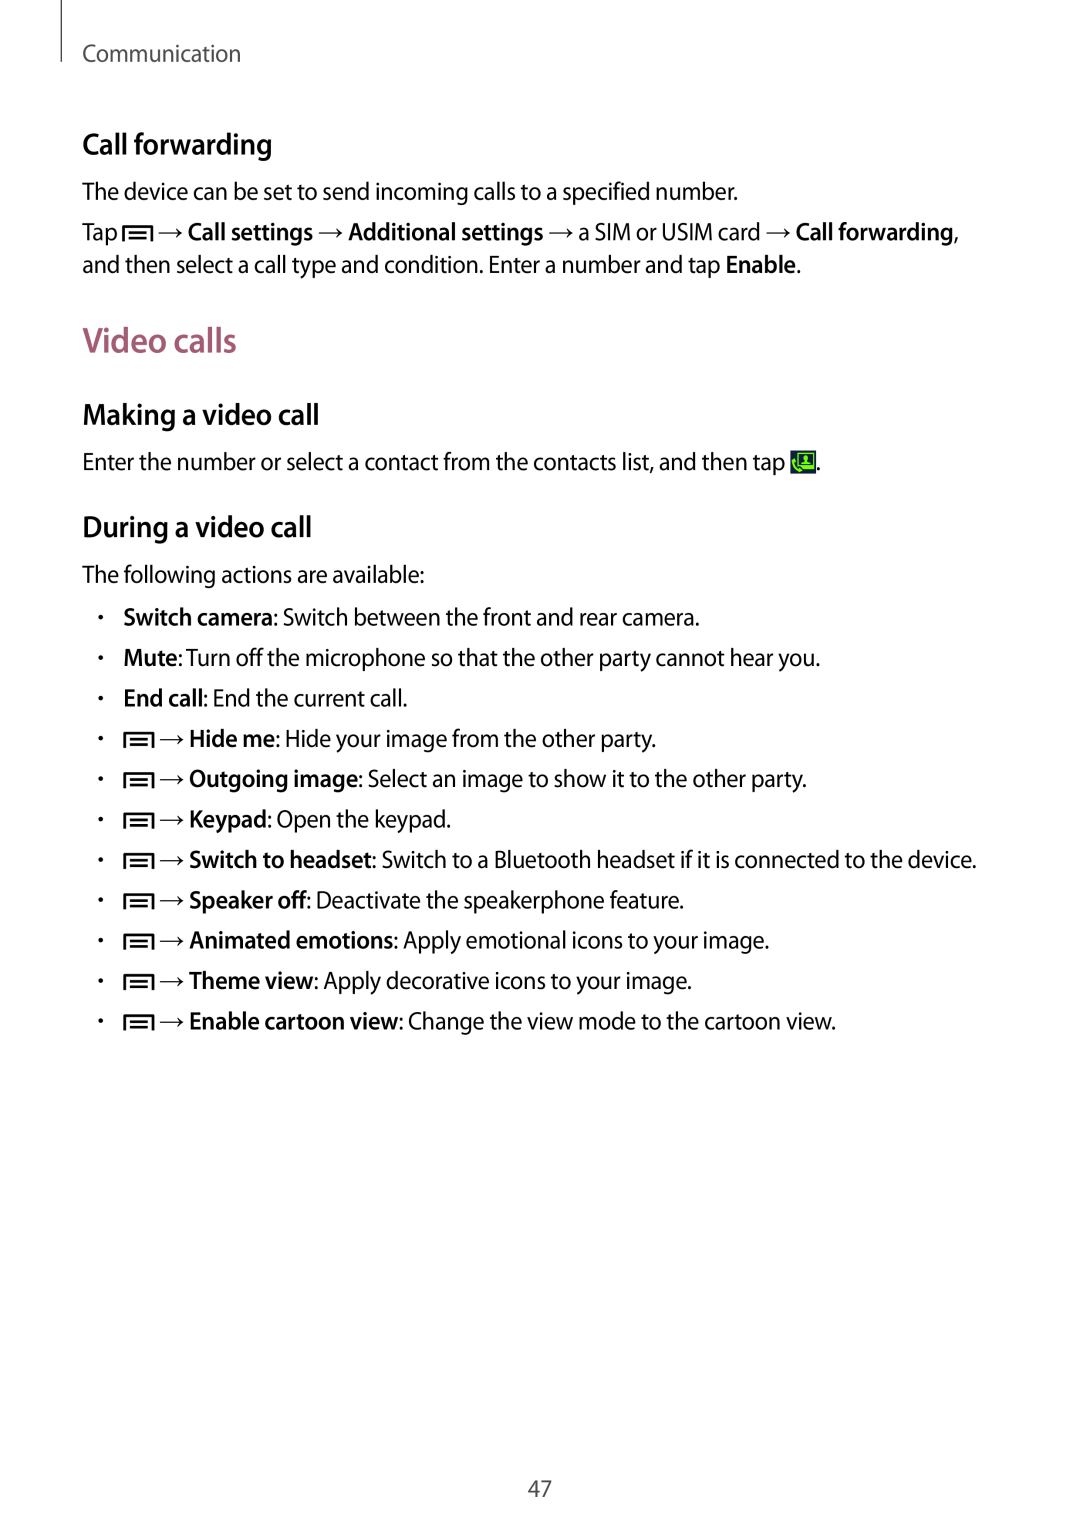 Samsung SM-G7102ZKAAFR manual Video calls, Call forwarding, Making a video call, During a video call, Communication 